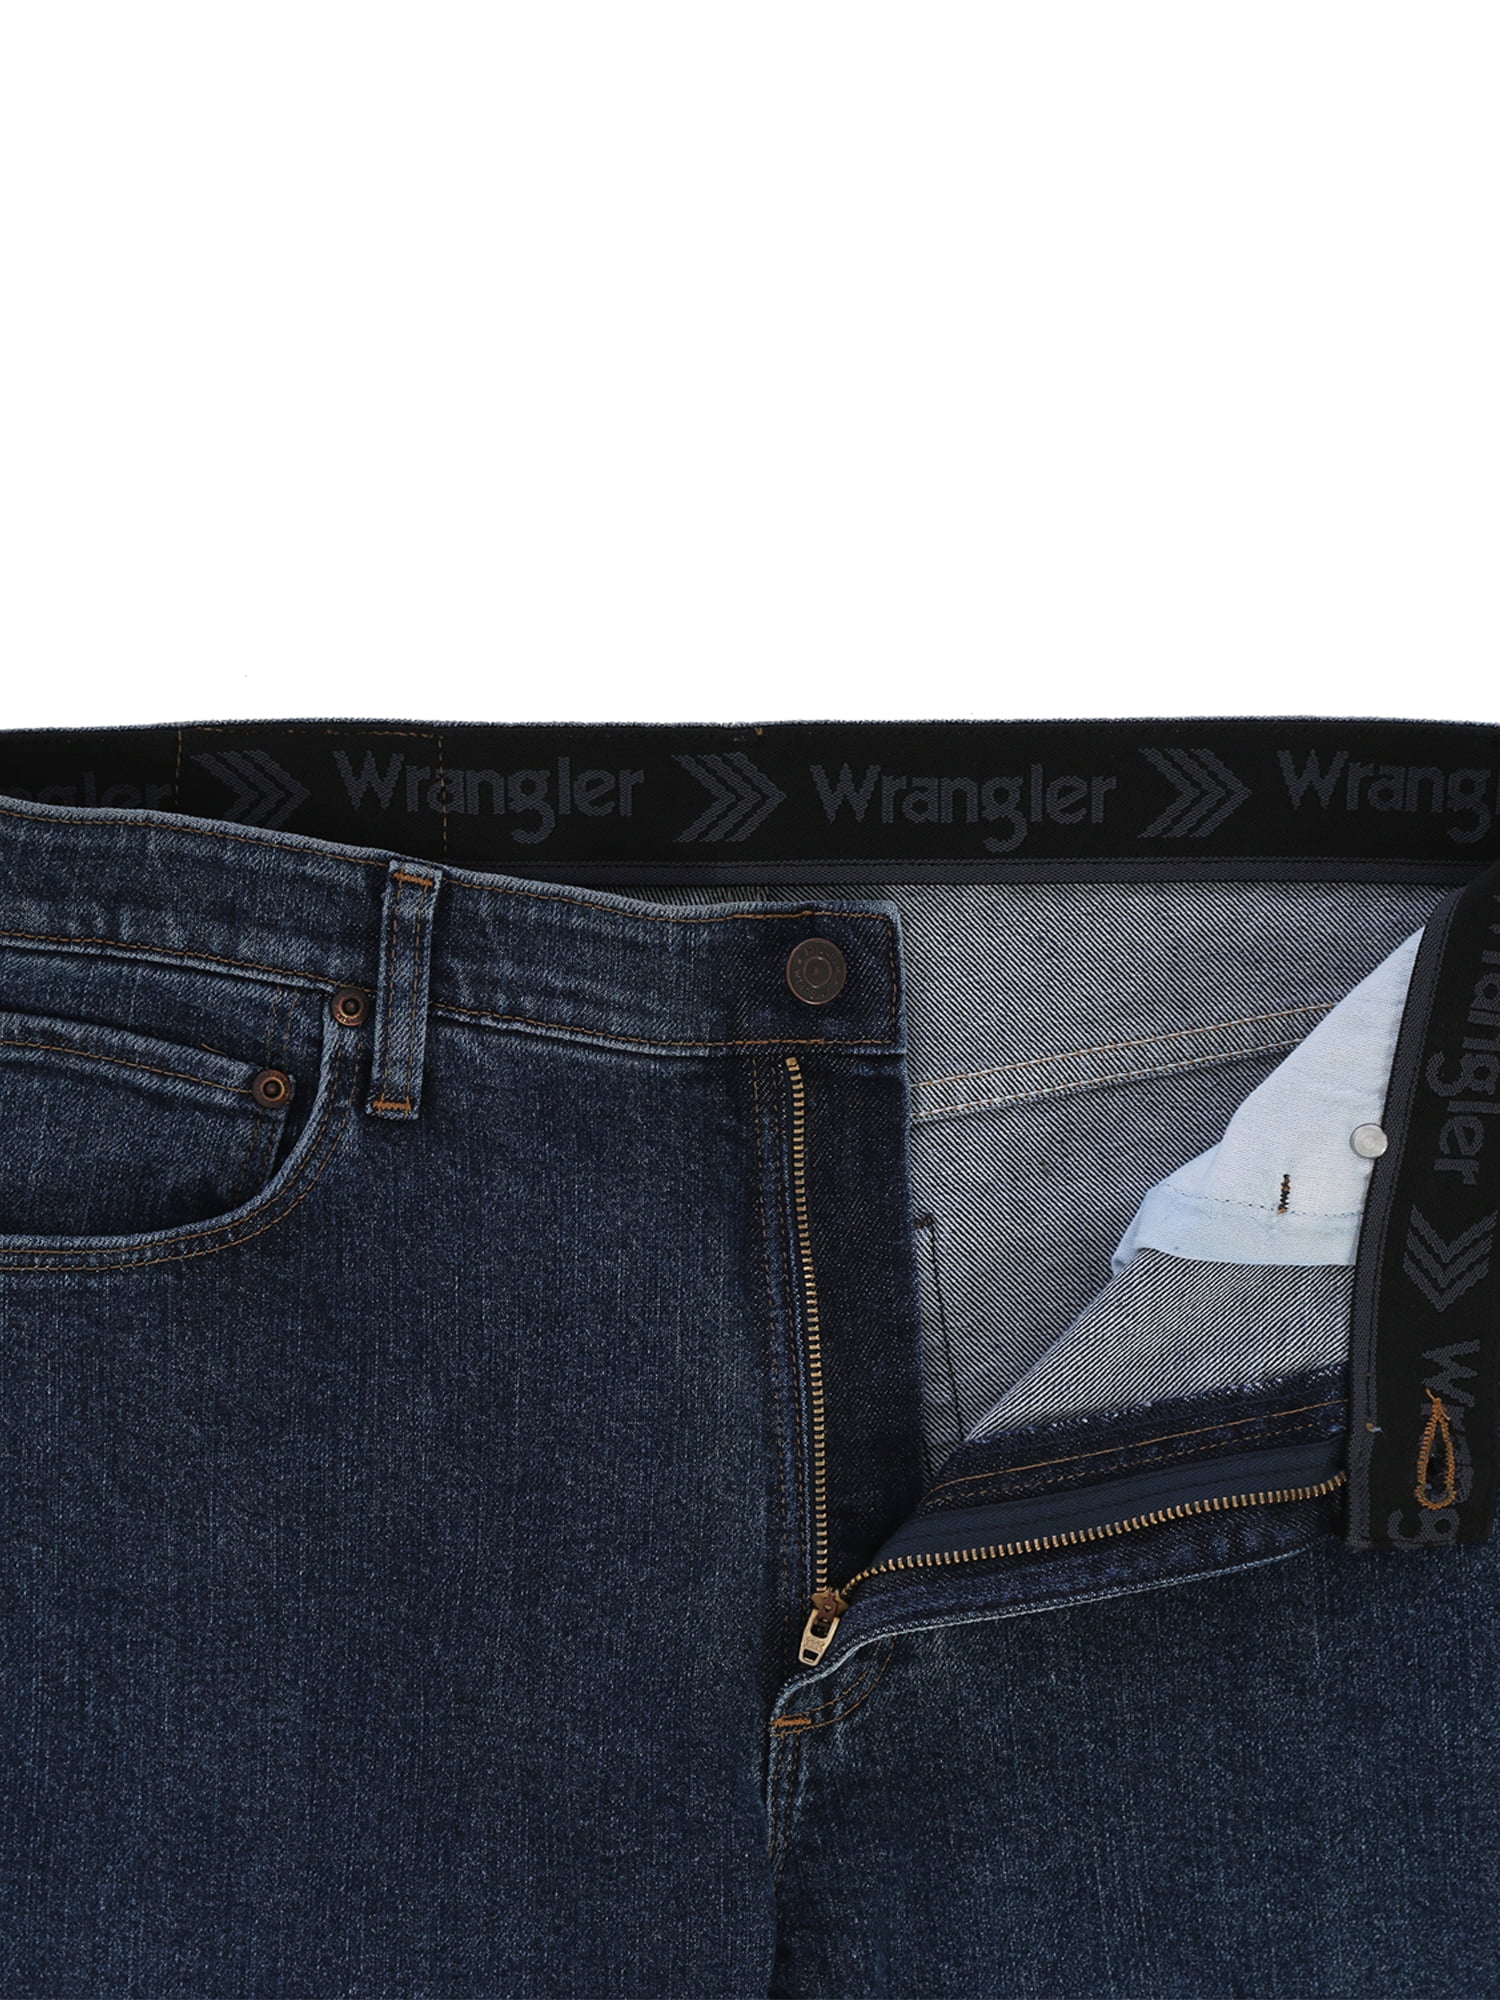 wrangler jeans performance series